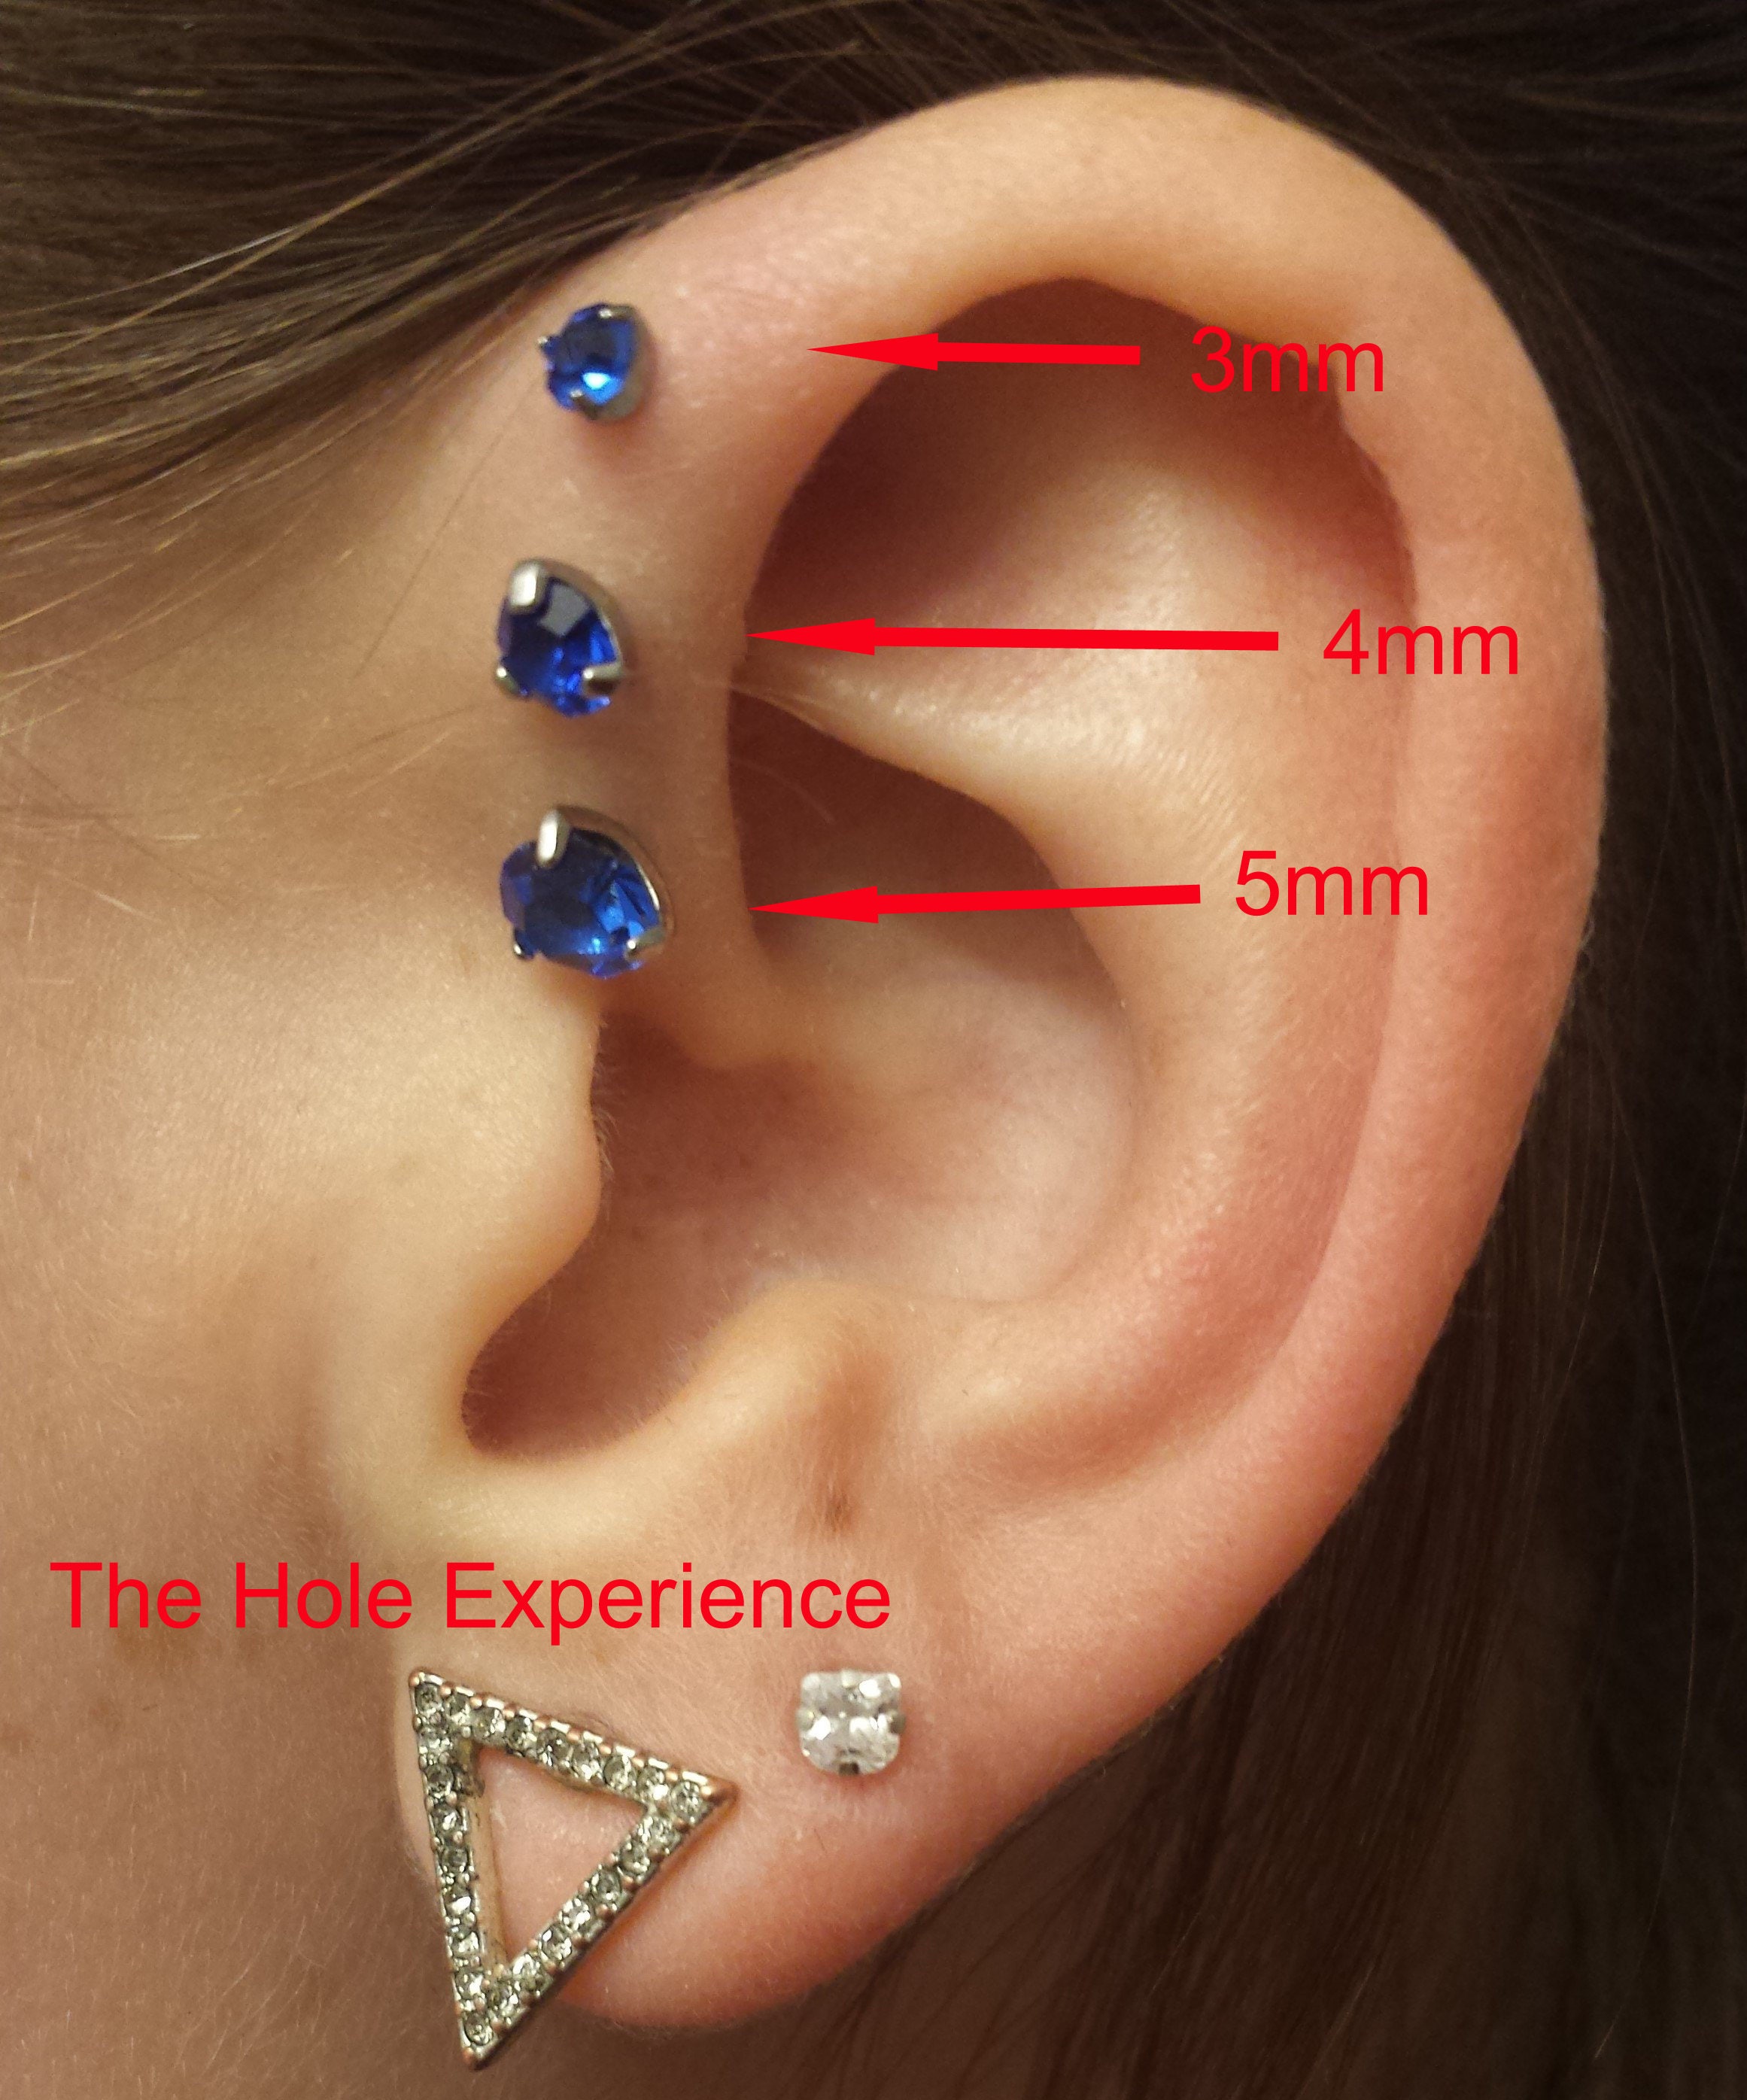 Forward Helix Earring Tragus Cartilage. 